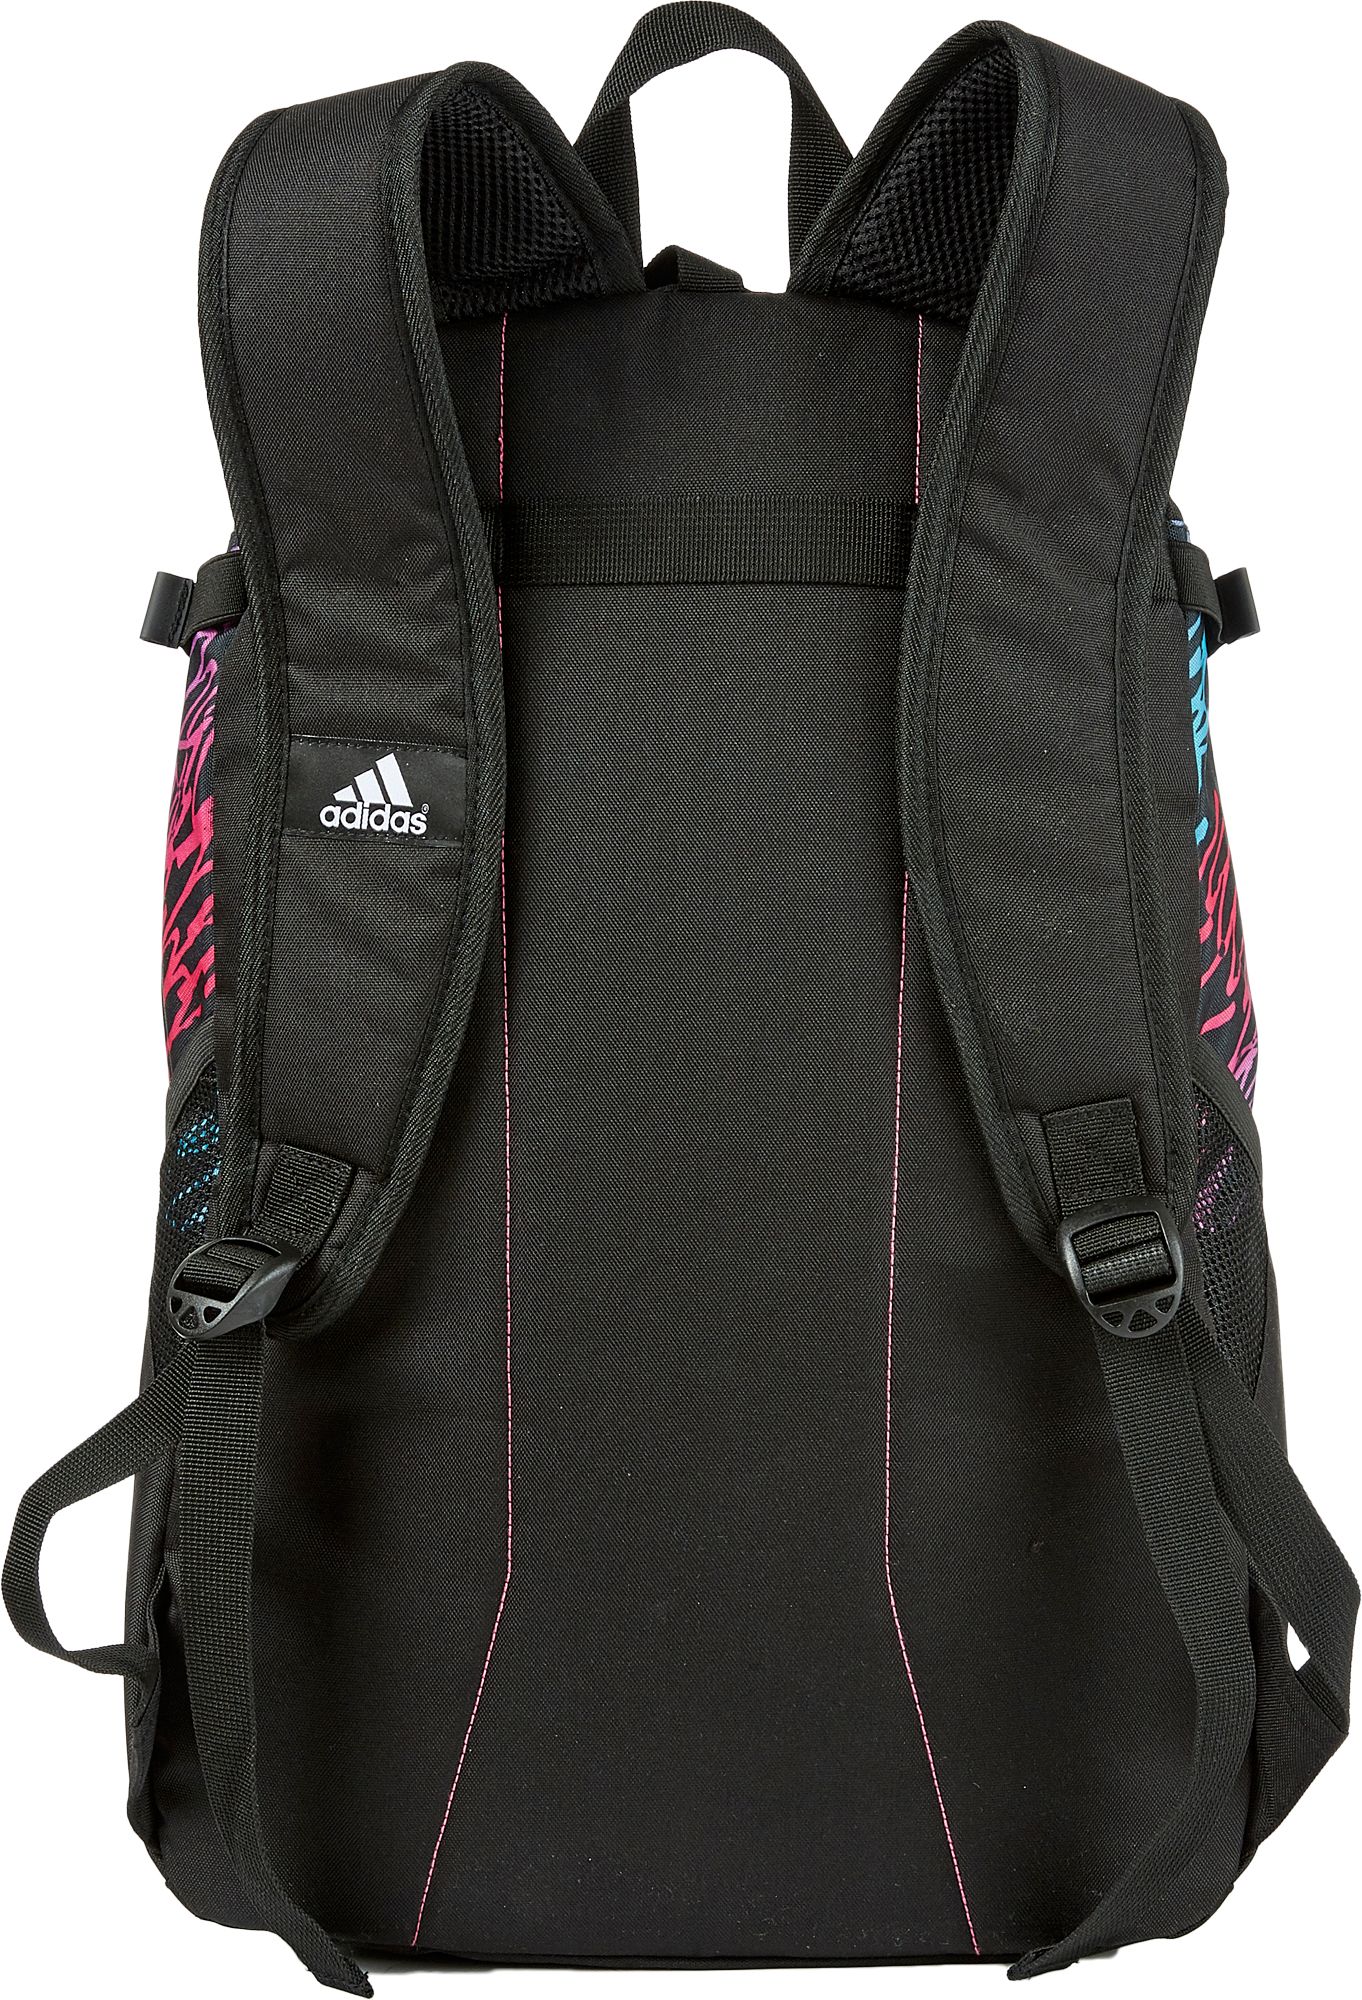 adidas triple stripe backpack